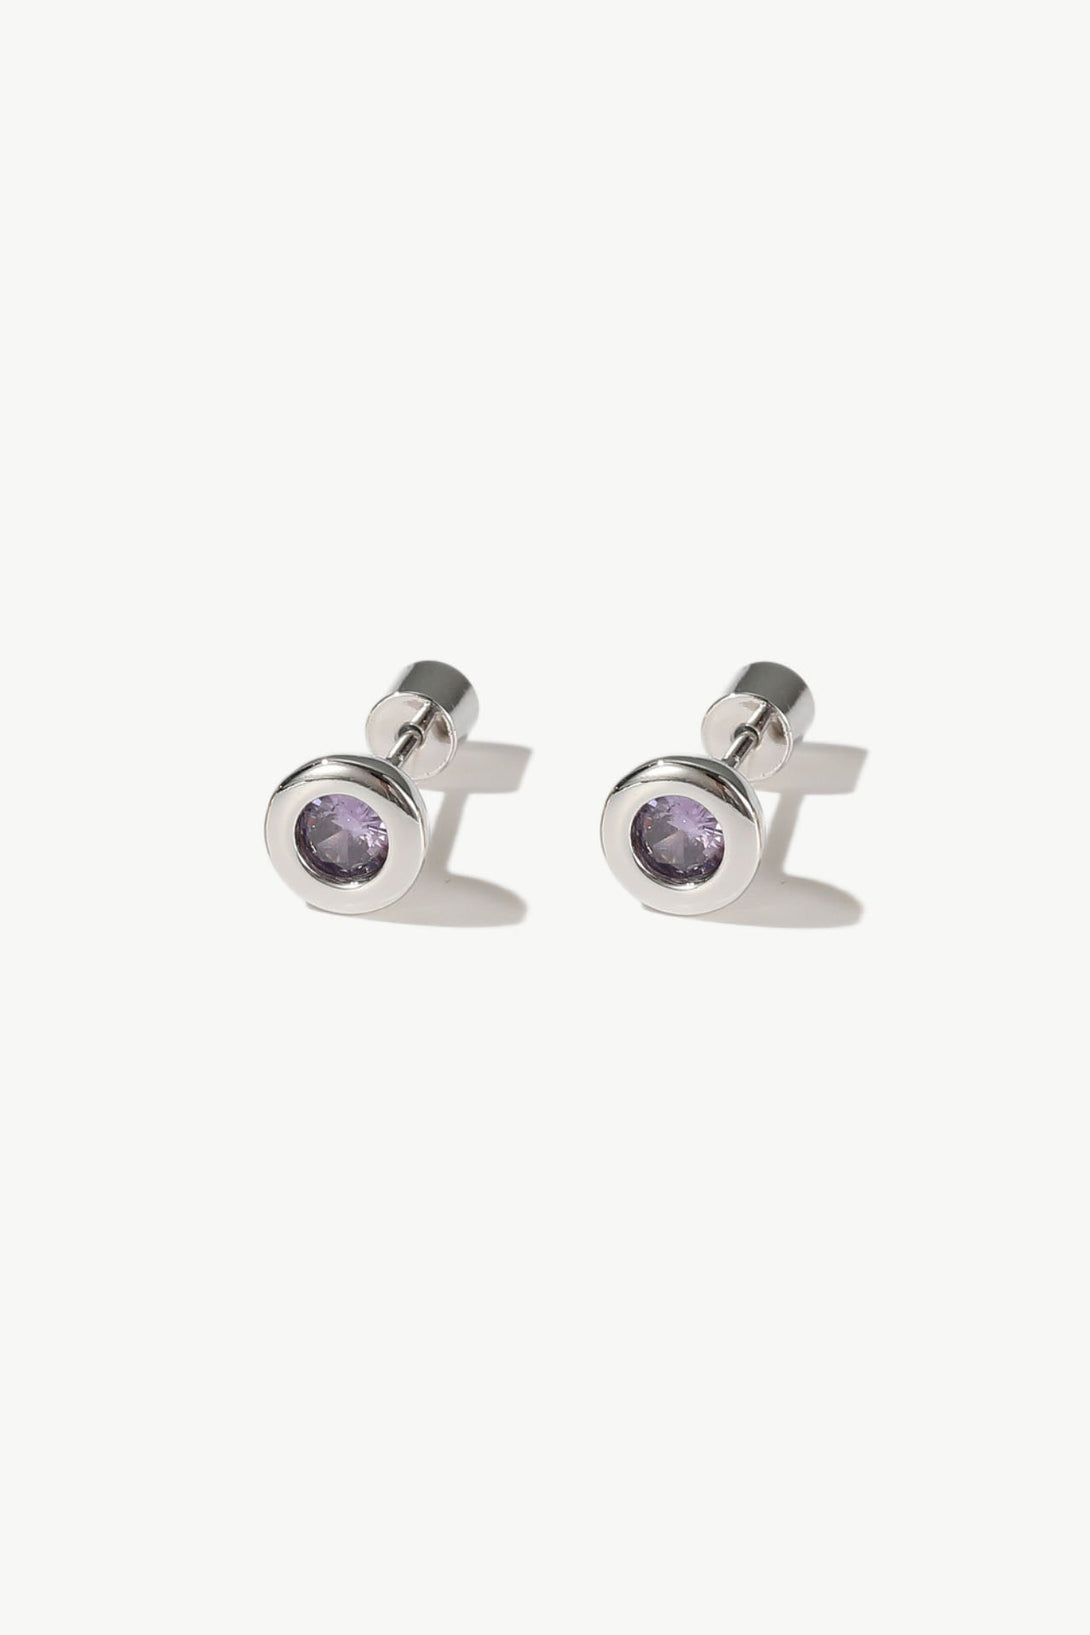 Aurora Silver Bezel Set Royal Purple Solitaire Stud Earrings - Classicharms